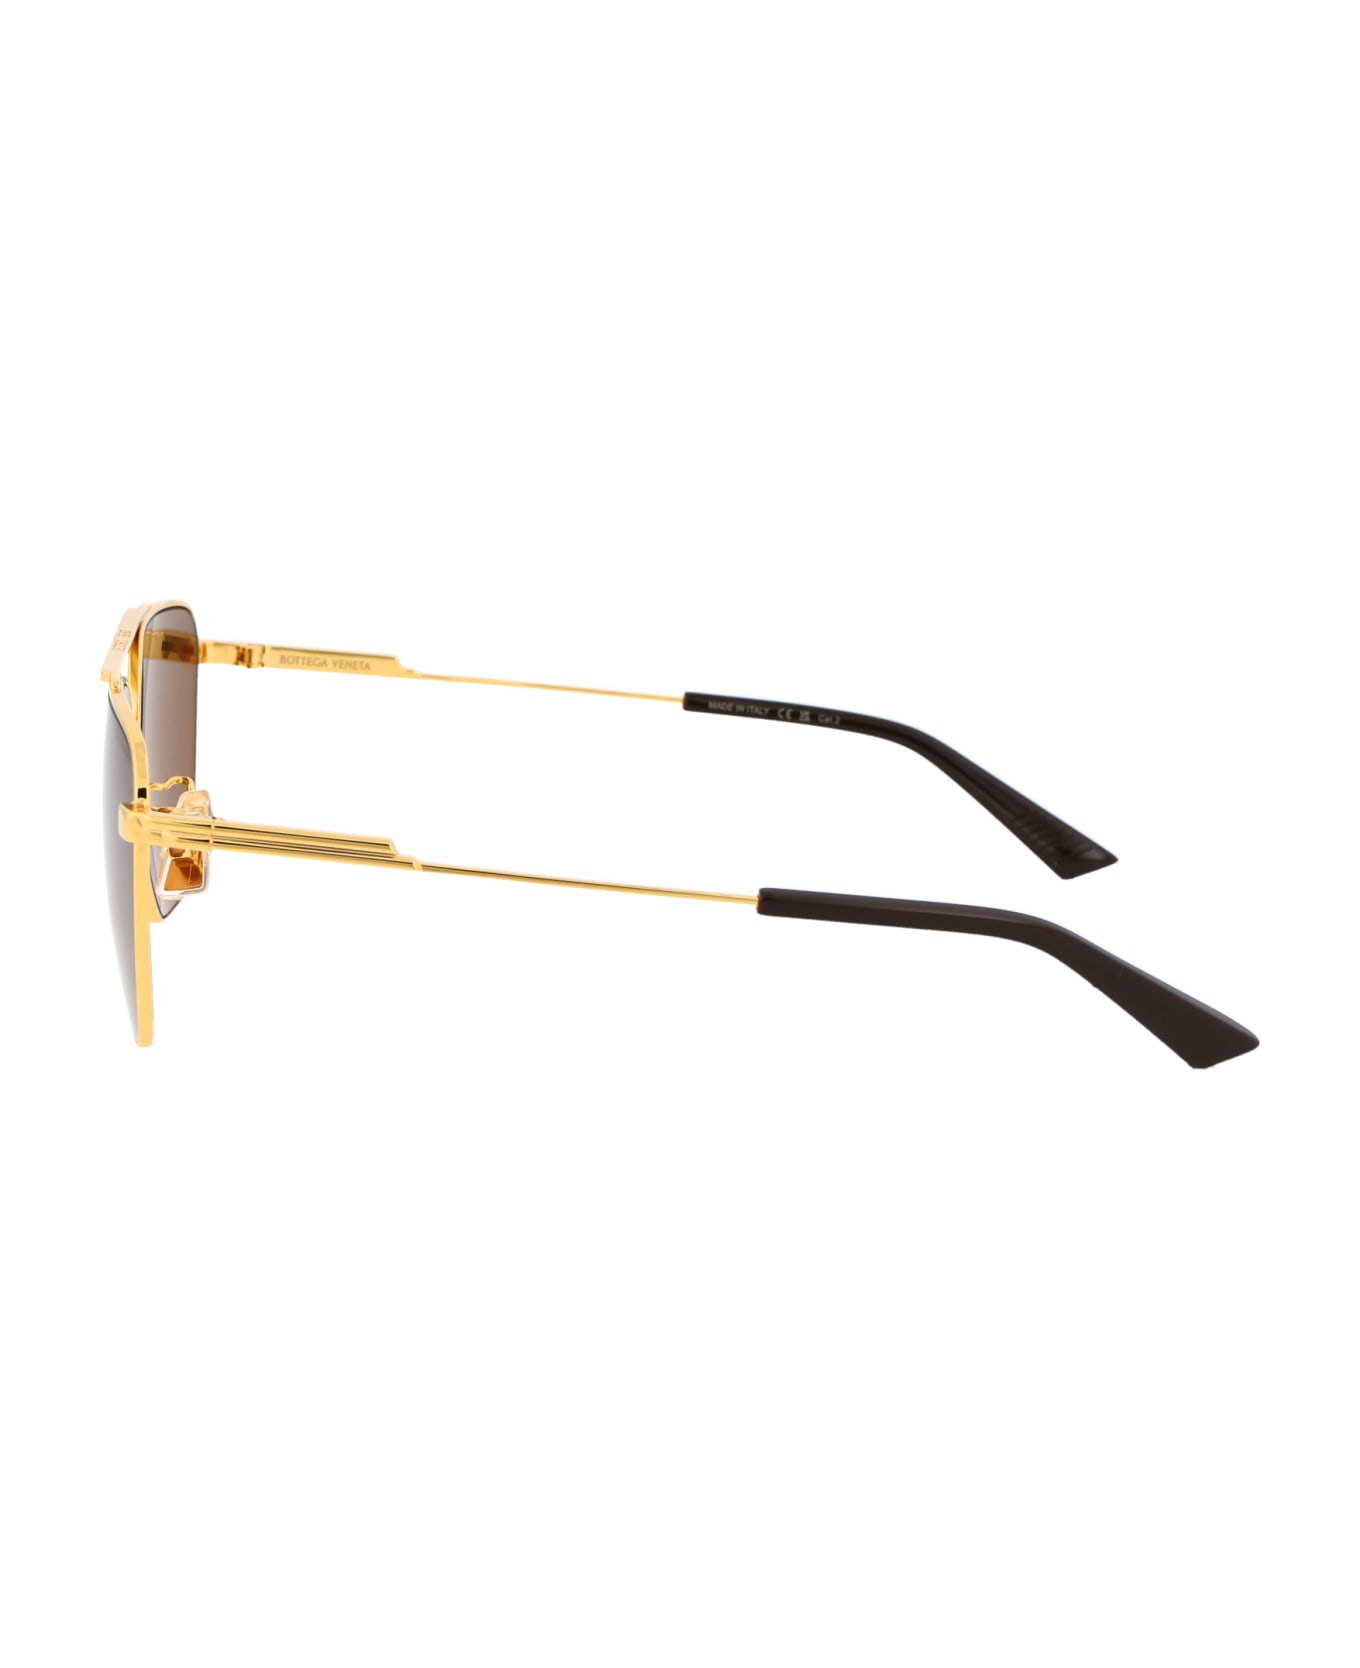 Bottega Veneta Eyewear Bv1236s Sunglasses - 002 GOLD GOLD BROWN